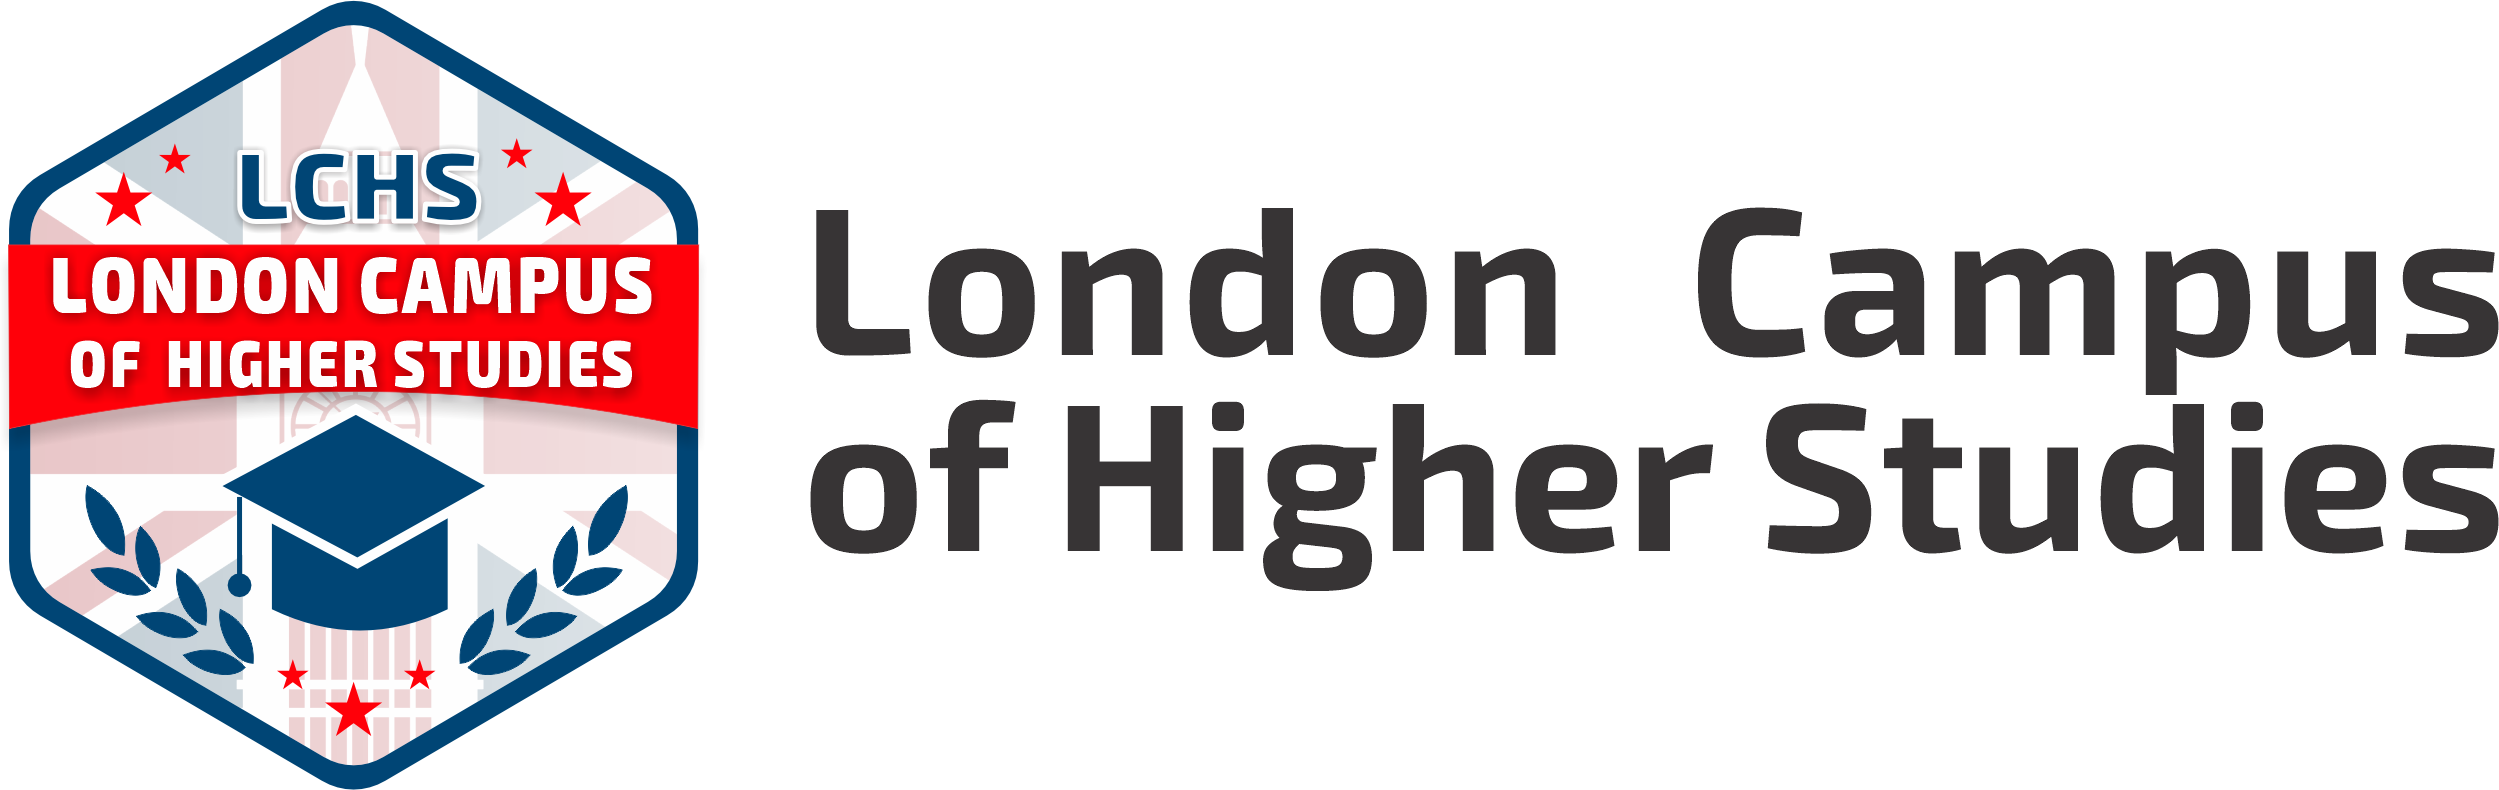 London Campus of Higher Studies